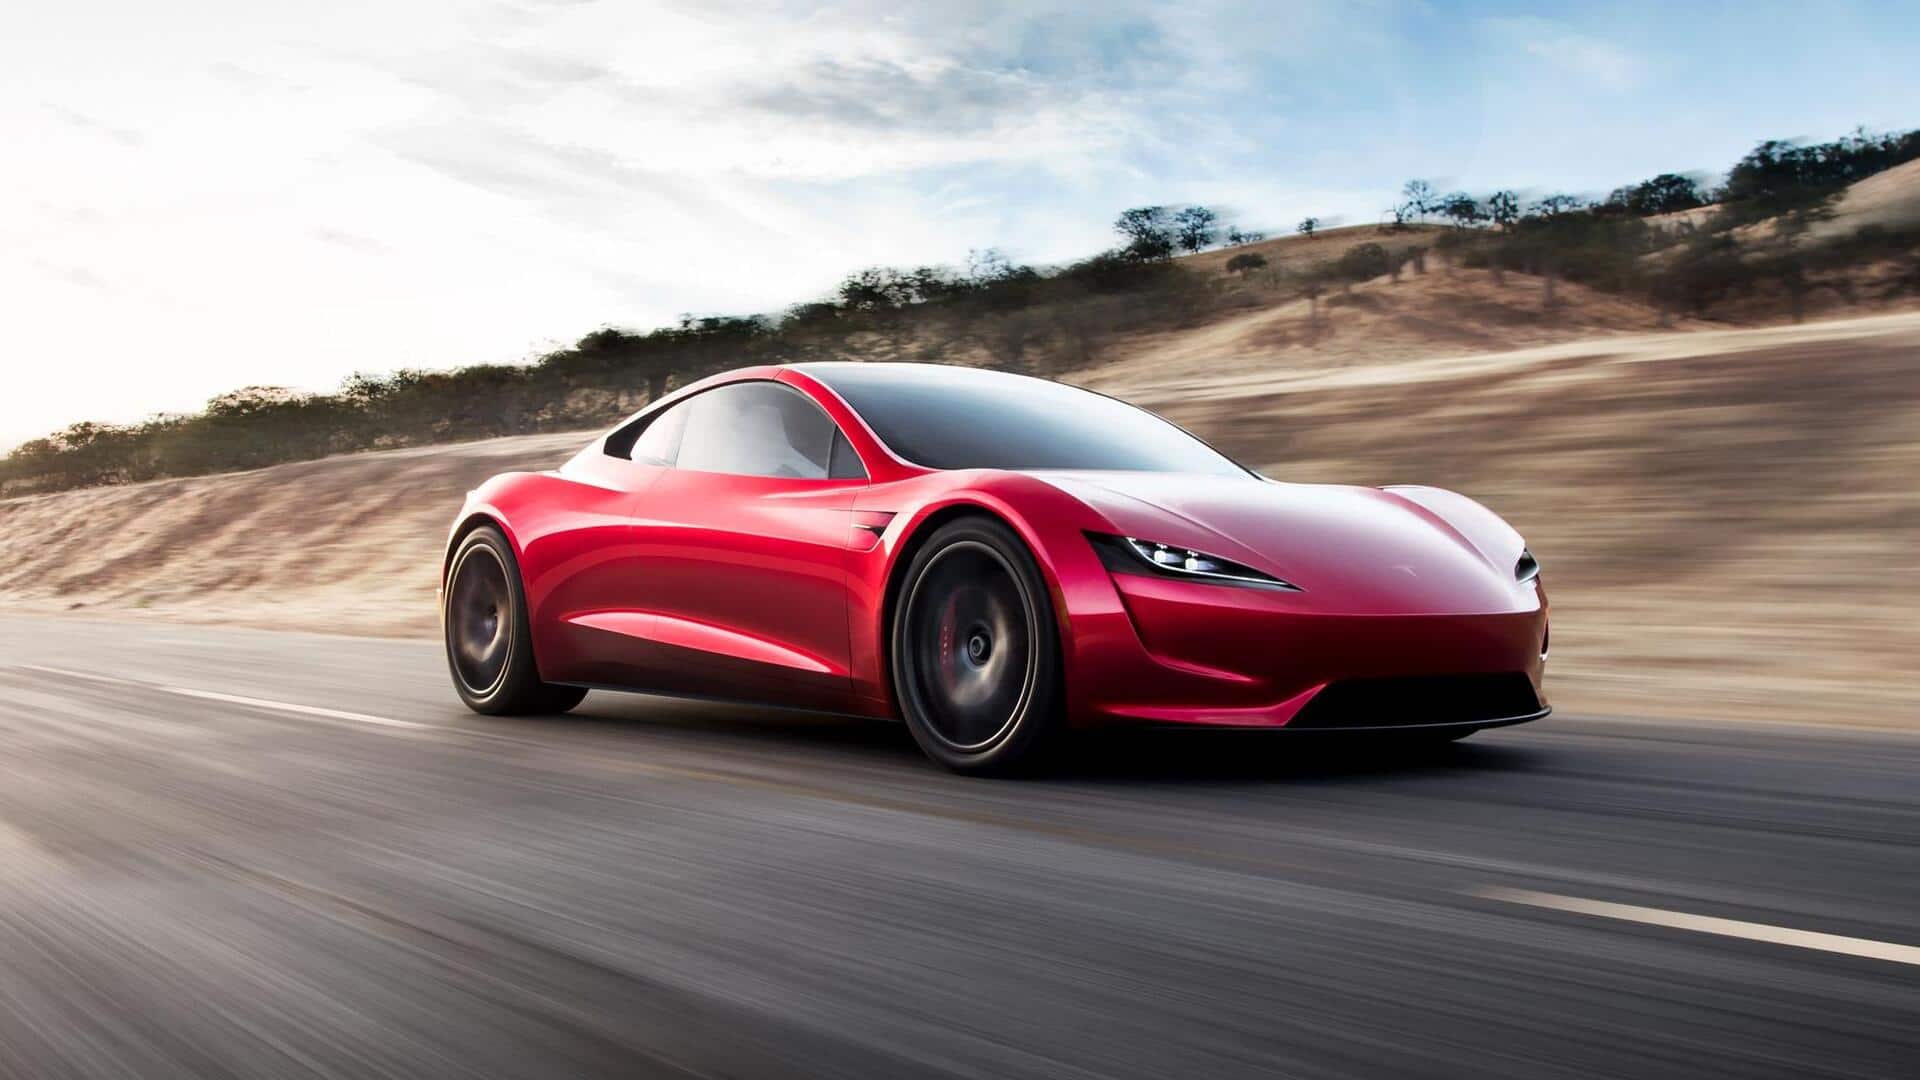 टेस्ला की रोडस्टर इलेक्ट्रिक स्पोर्ट्स कार अगले साल आएगी, एलन मस्क ने किया ऐलान  